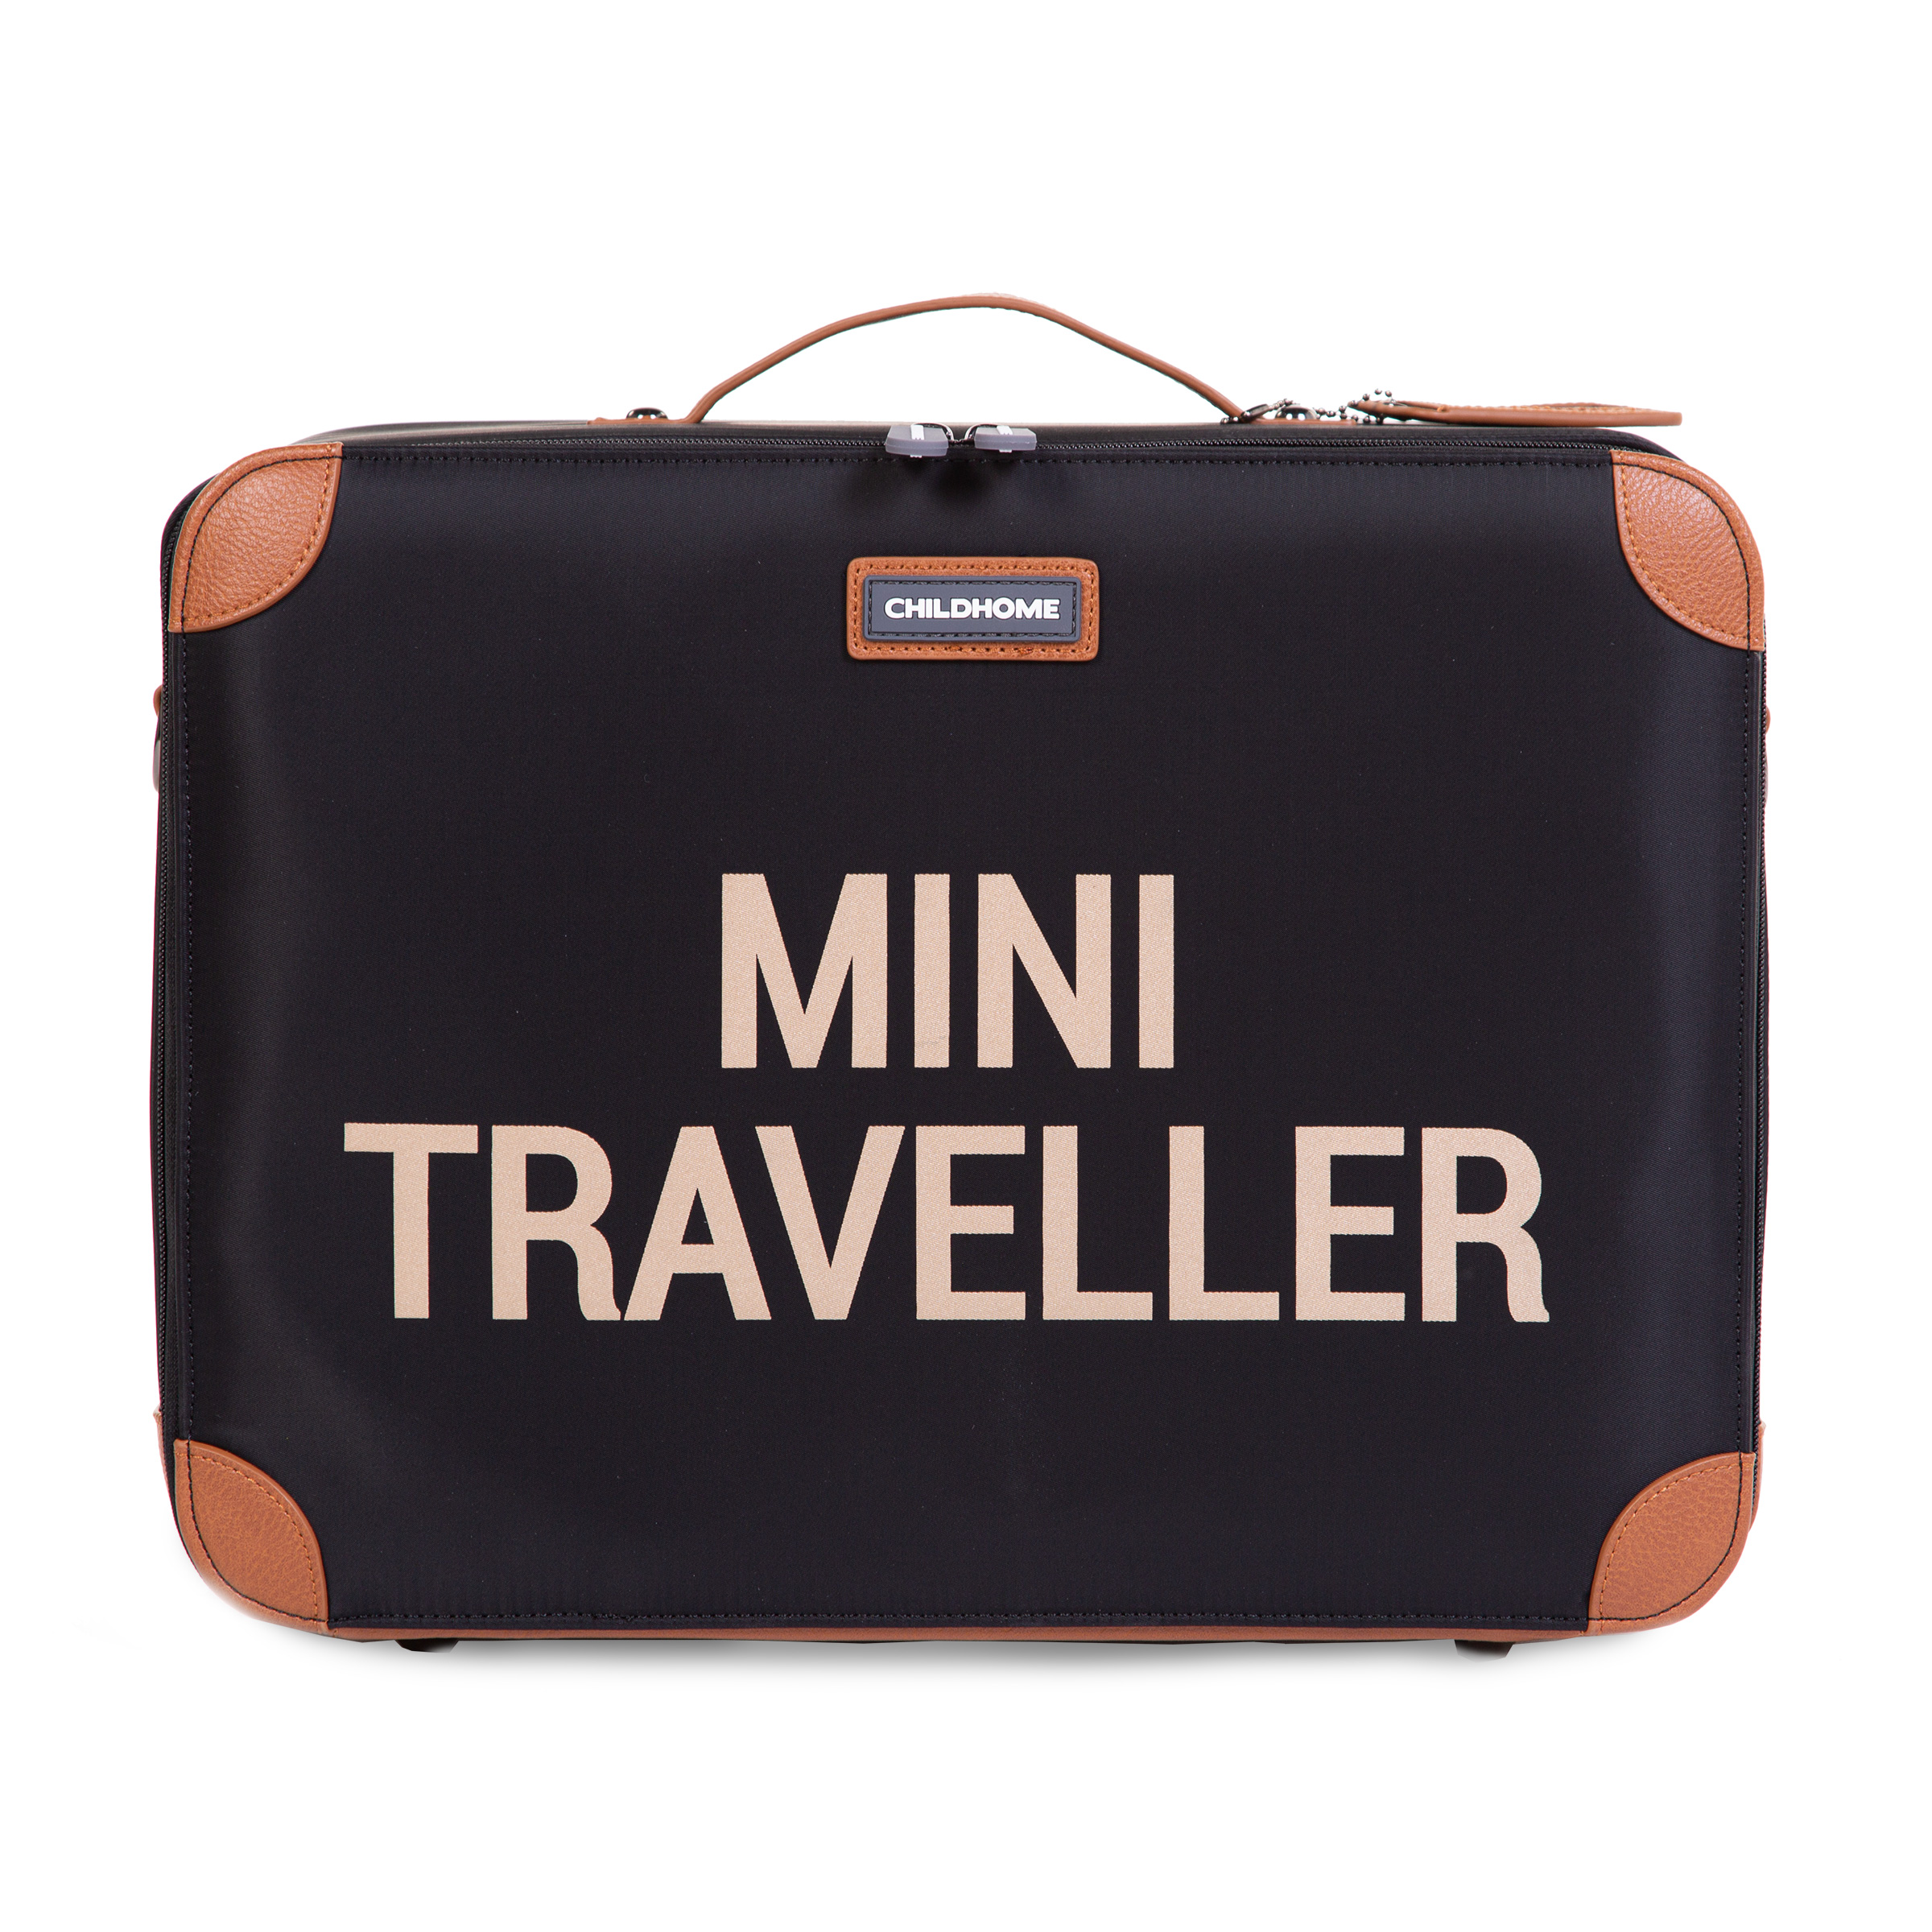 Childhome Mini Traveller utazótáska - fekete/arany